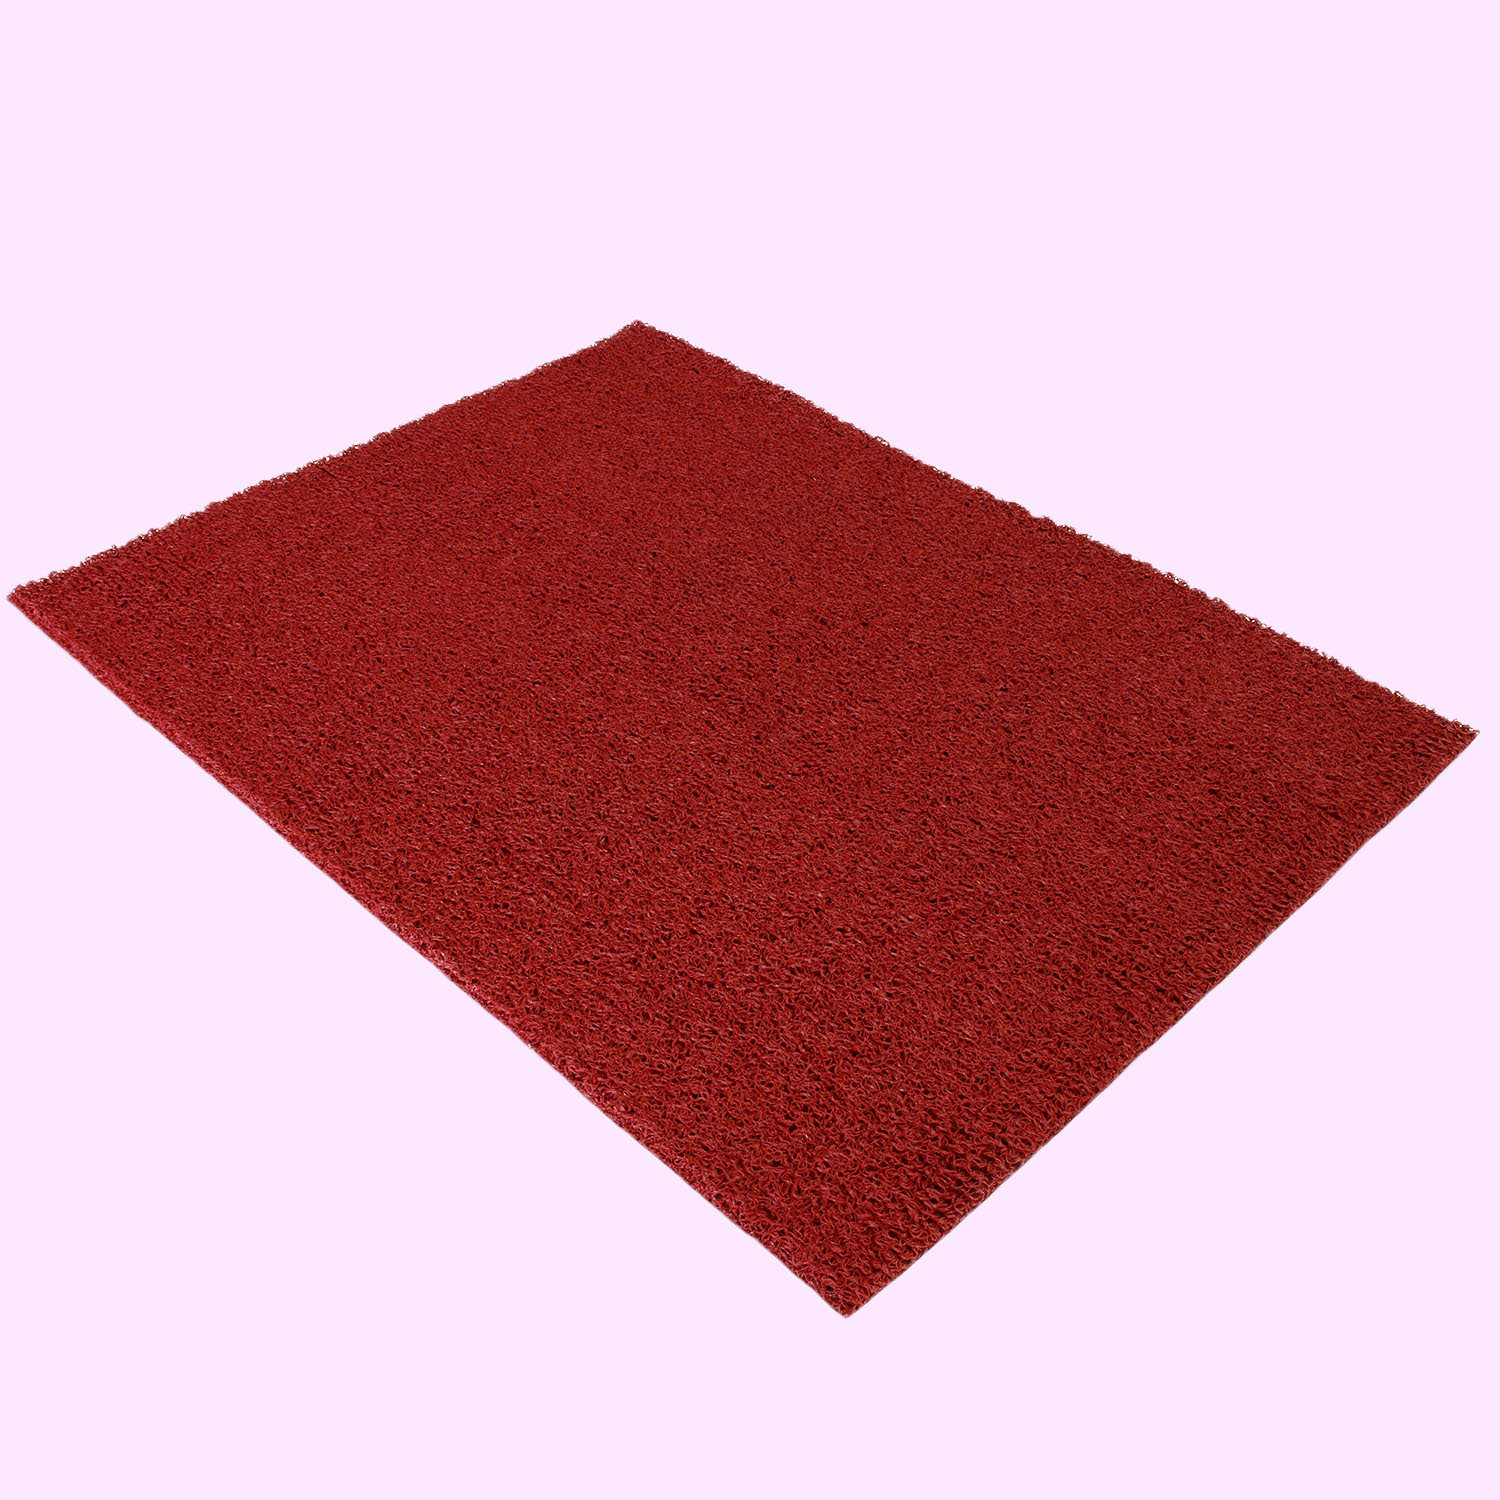 Droogloopmat - Rood - 90 x 120 - Rubberren onderrug - 1,5 cm rand - Wash & Clean | Blueflower.be